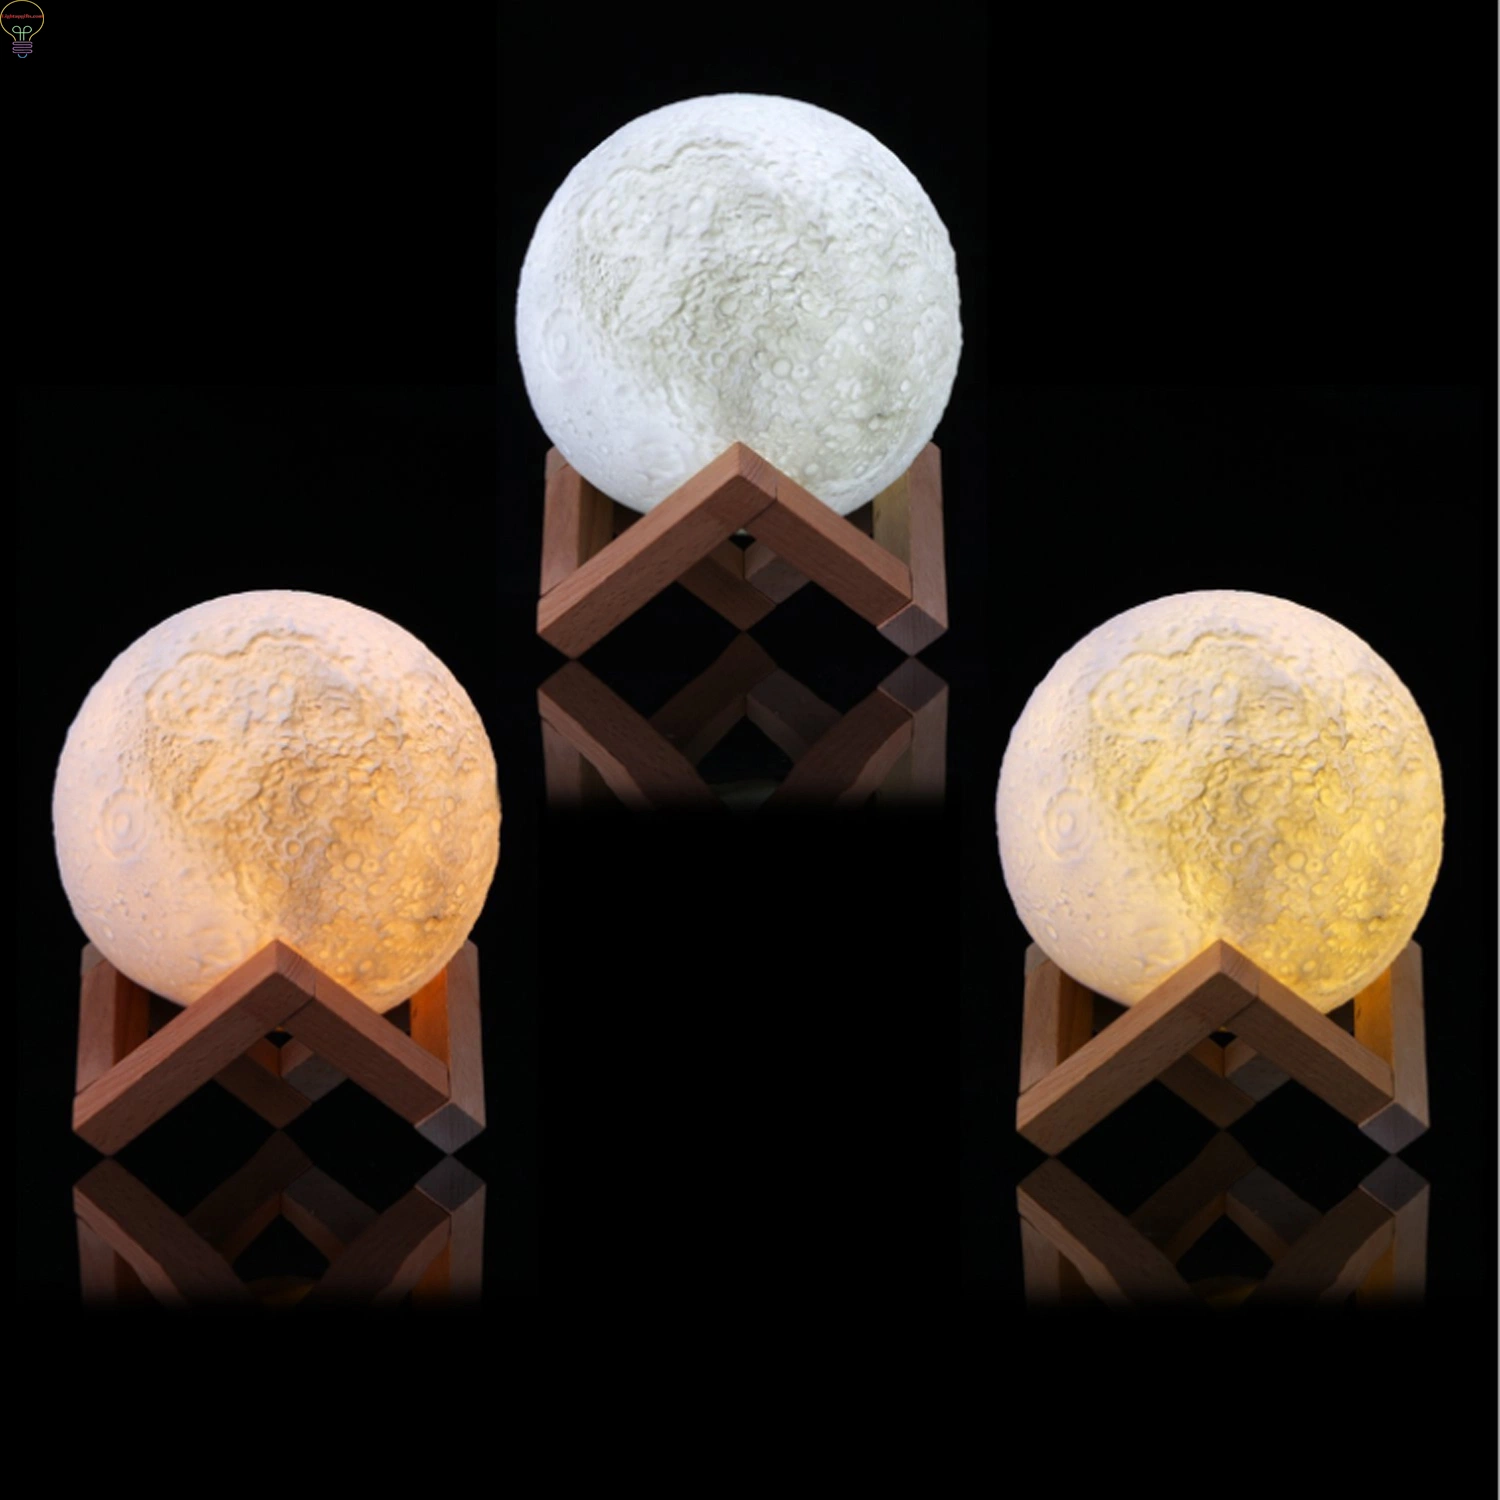 Magicfly Moon Lamp 3D Printing Moon Light Rechargeable Lunar Light